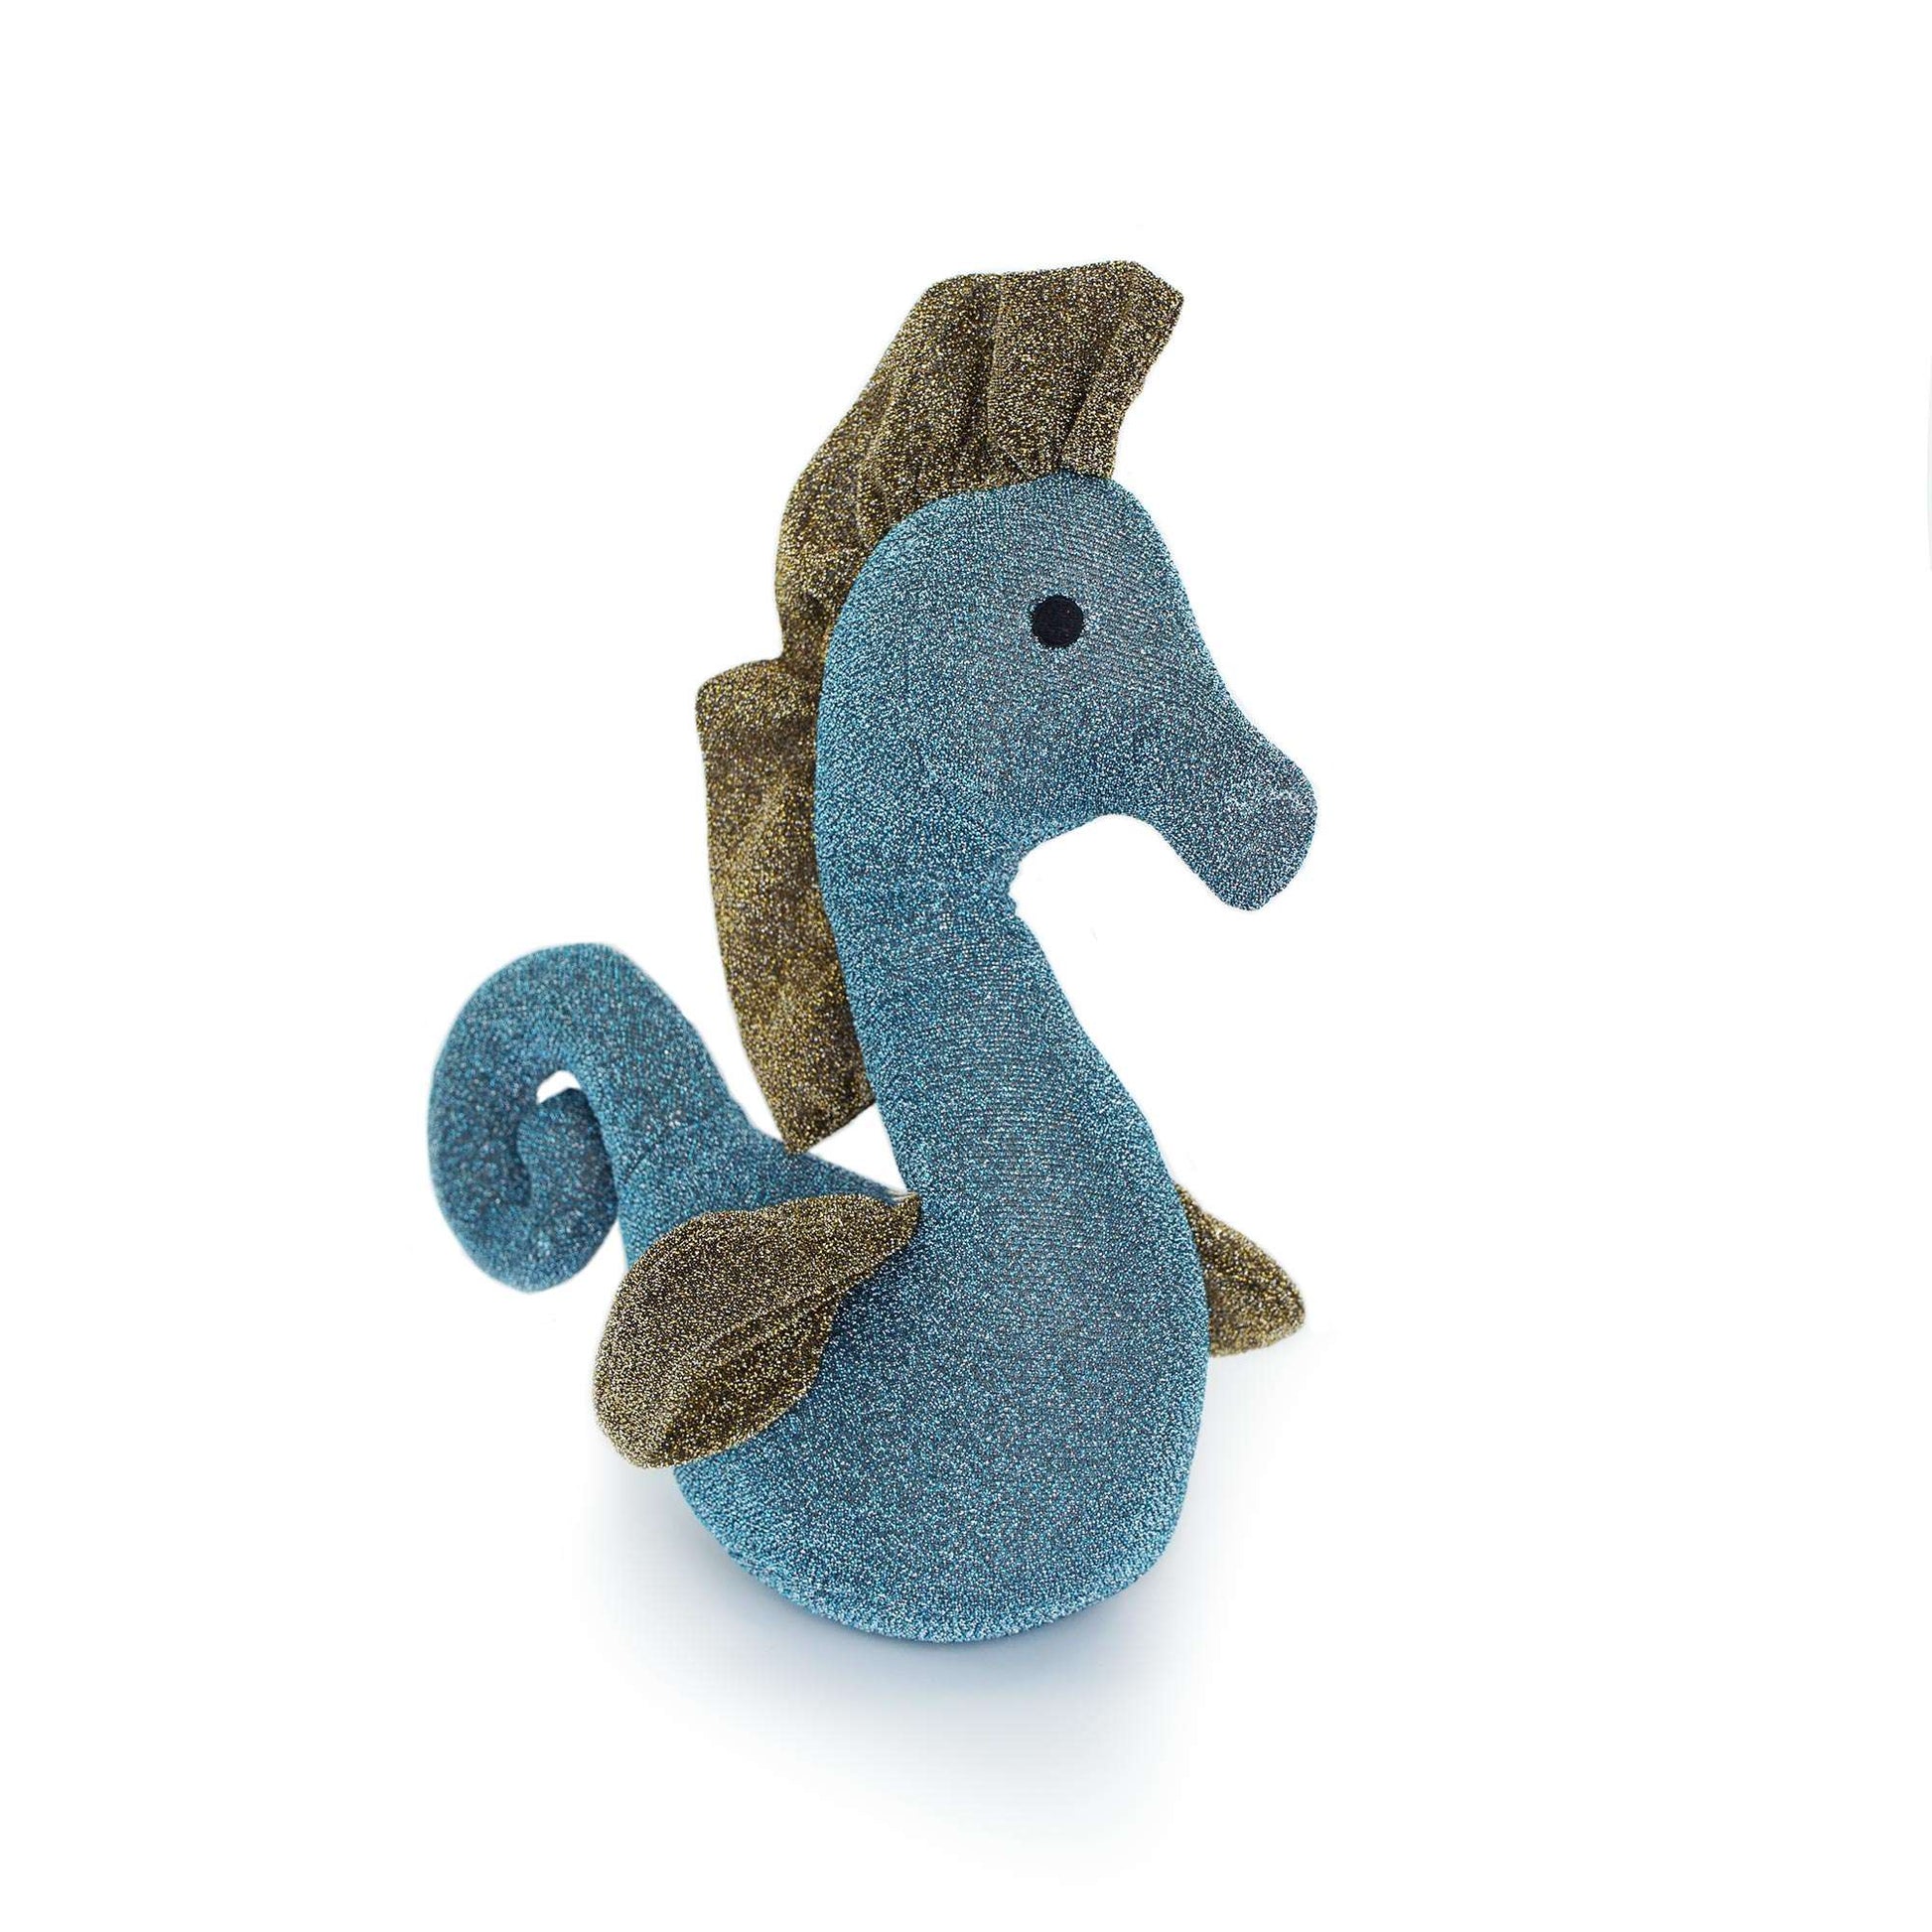 Seahorse stuffed animal wallpaper PlushThis